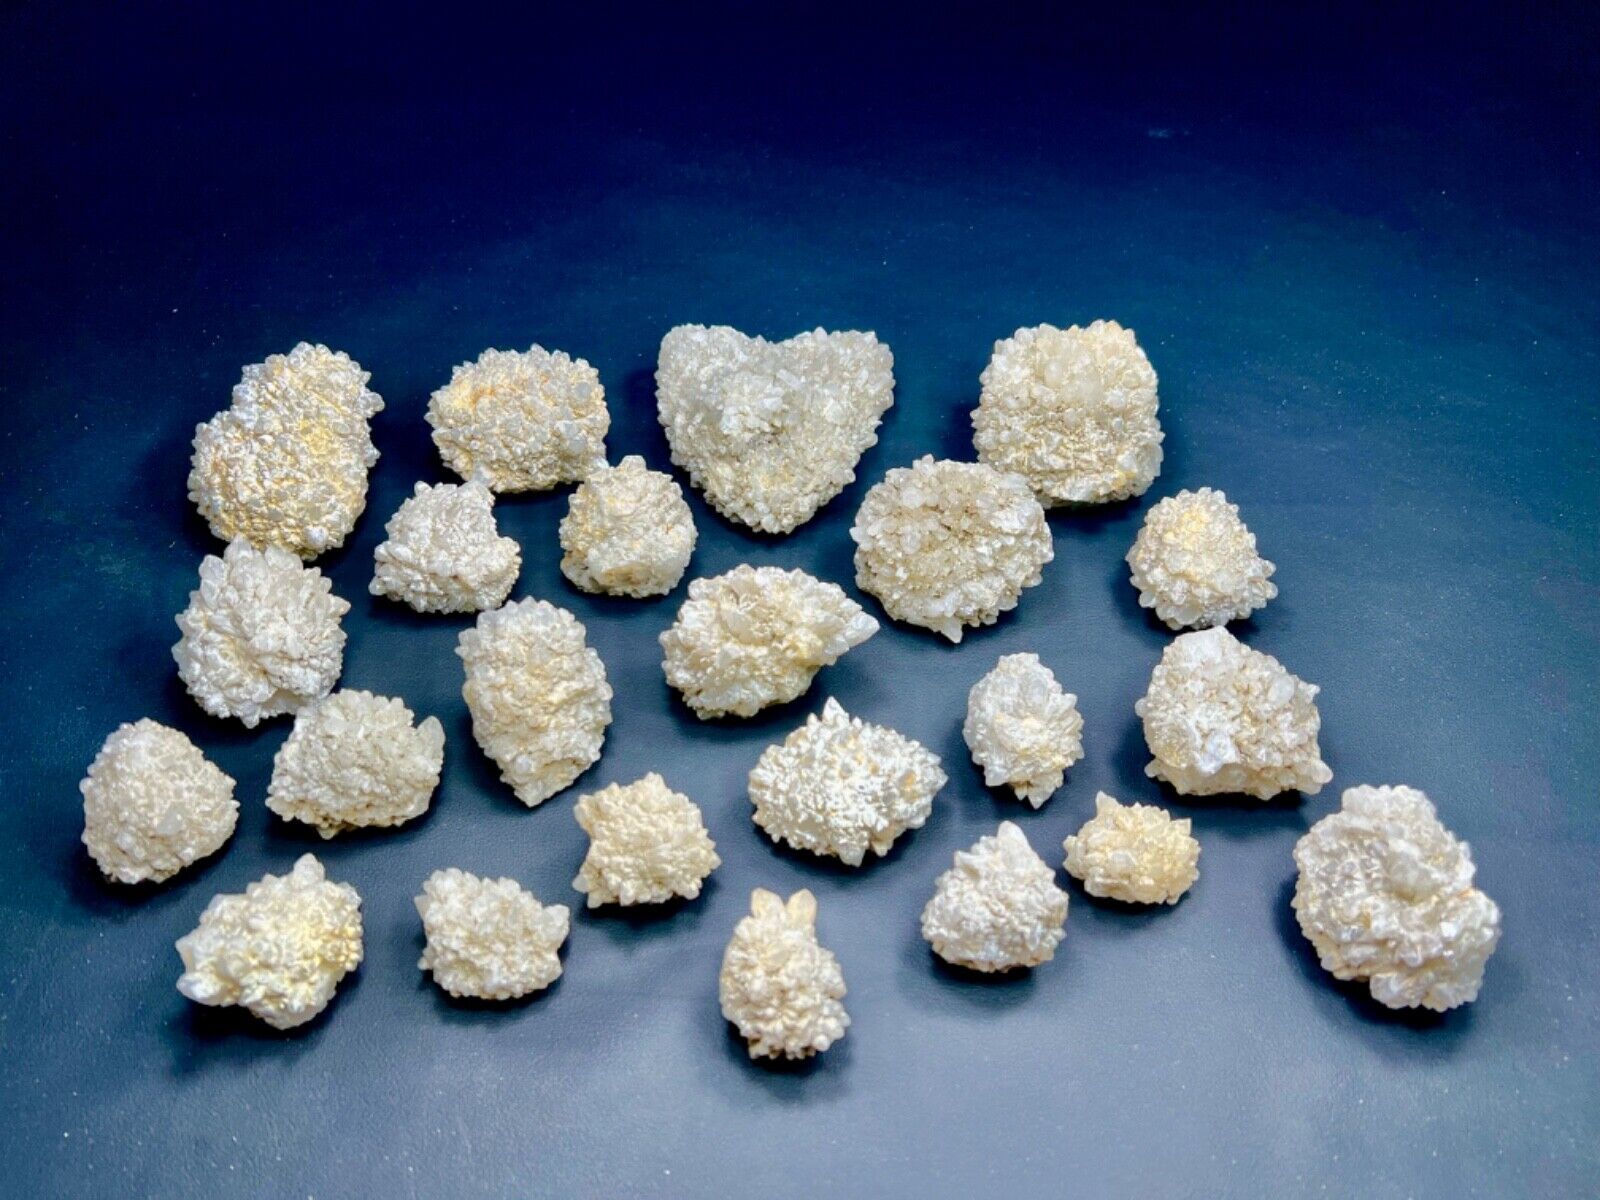 2164 Gram 23 pieces of COVID shape Quartz crystals specimens from Skardu Pak.